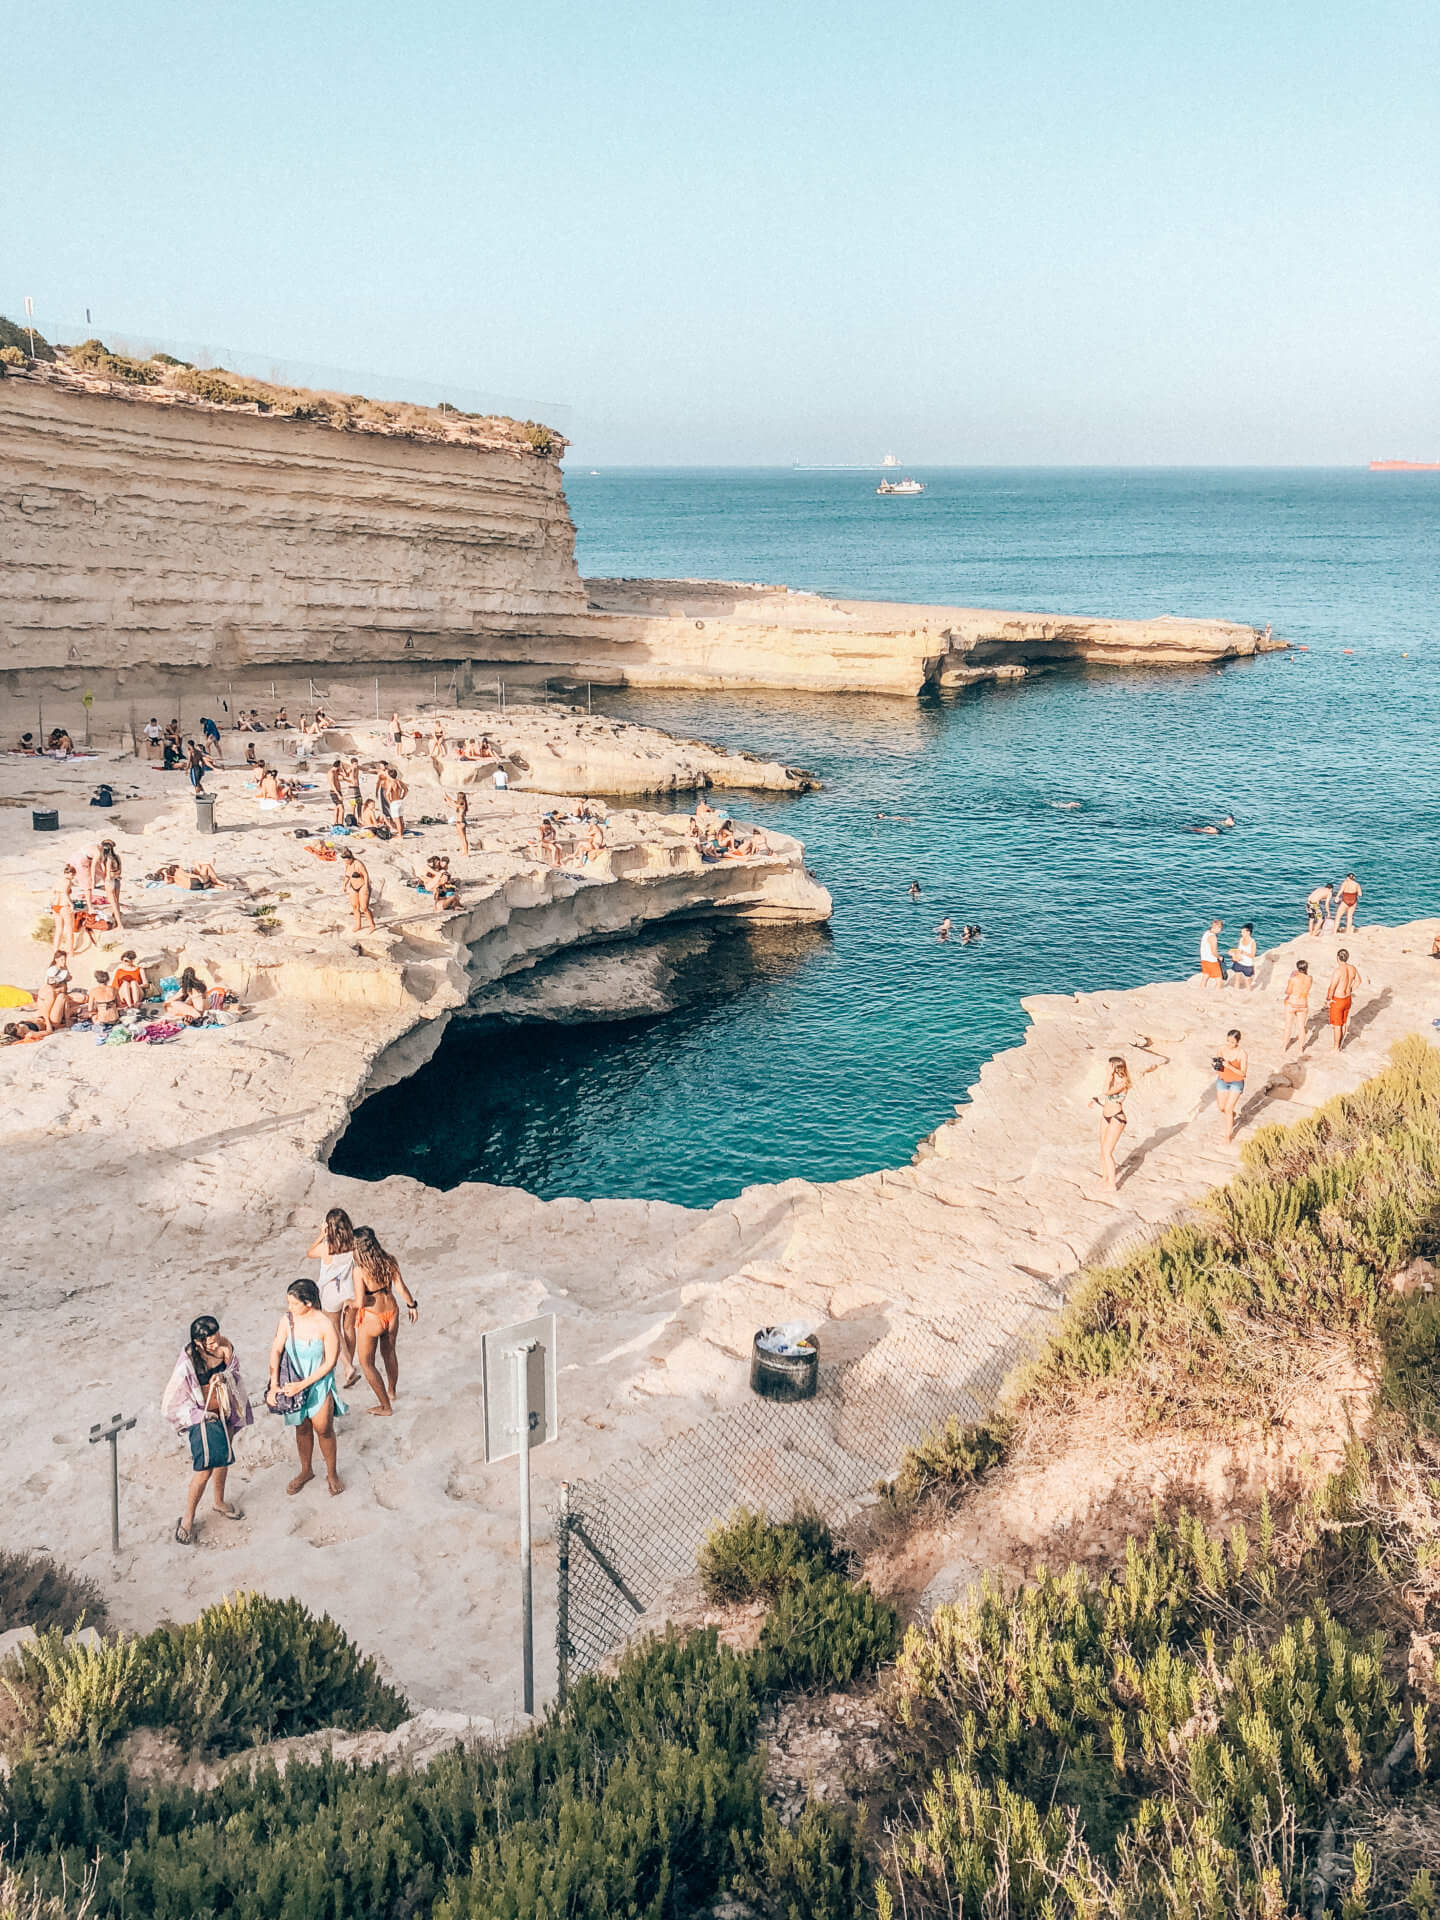 St. Peter’s Pool close to Marsaxlokkyou in the Malta Travel Guide: “Europe's Best Kept Secret”